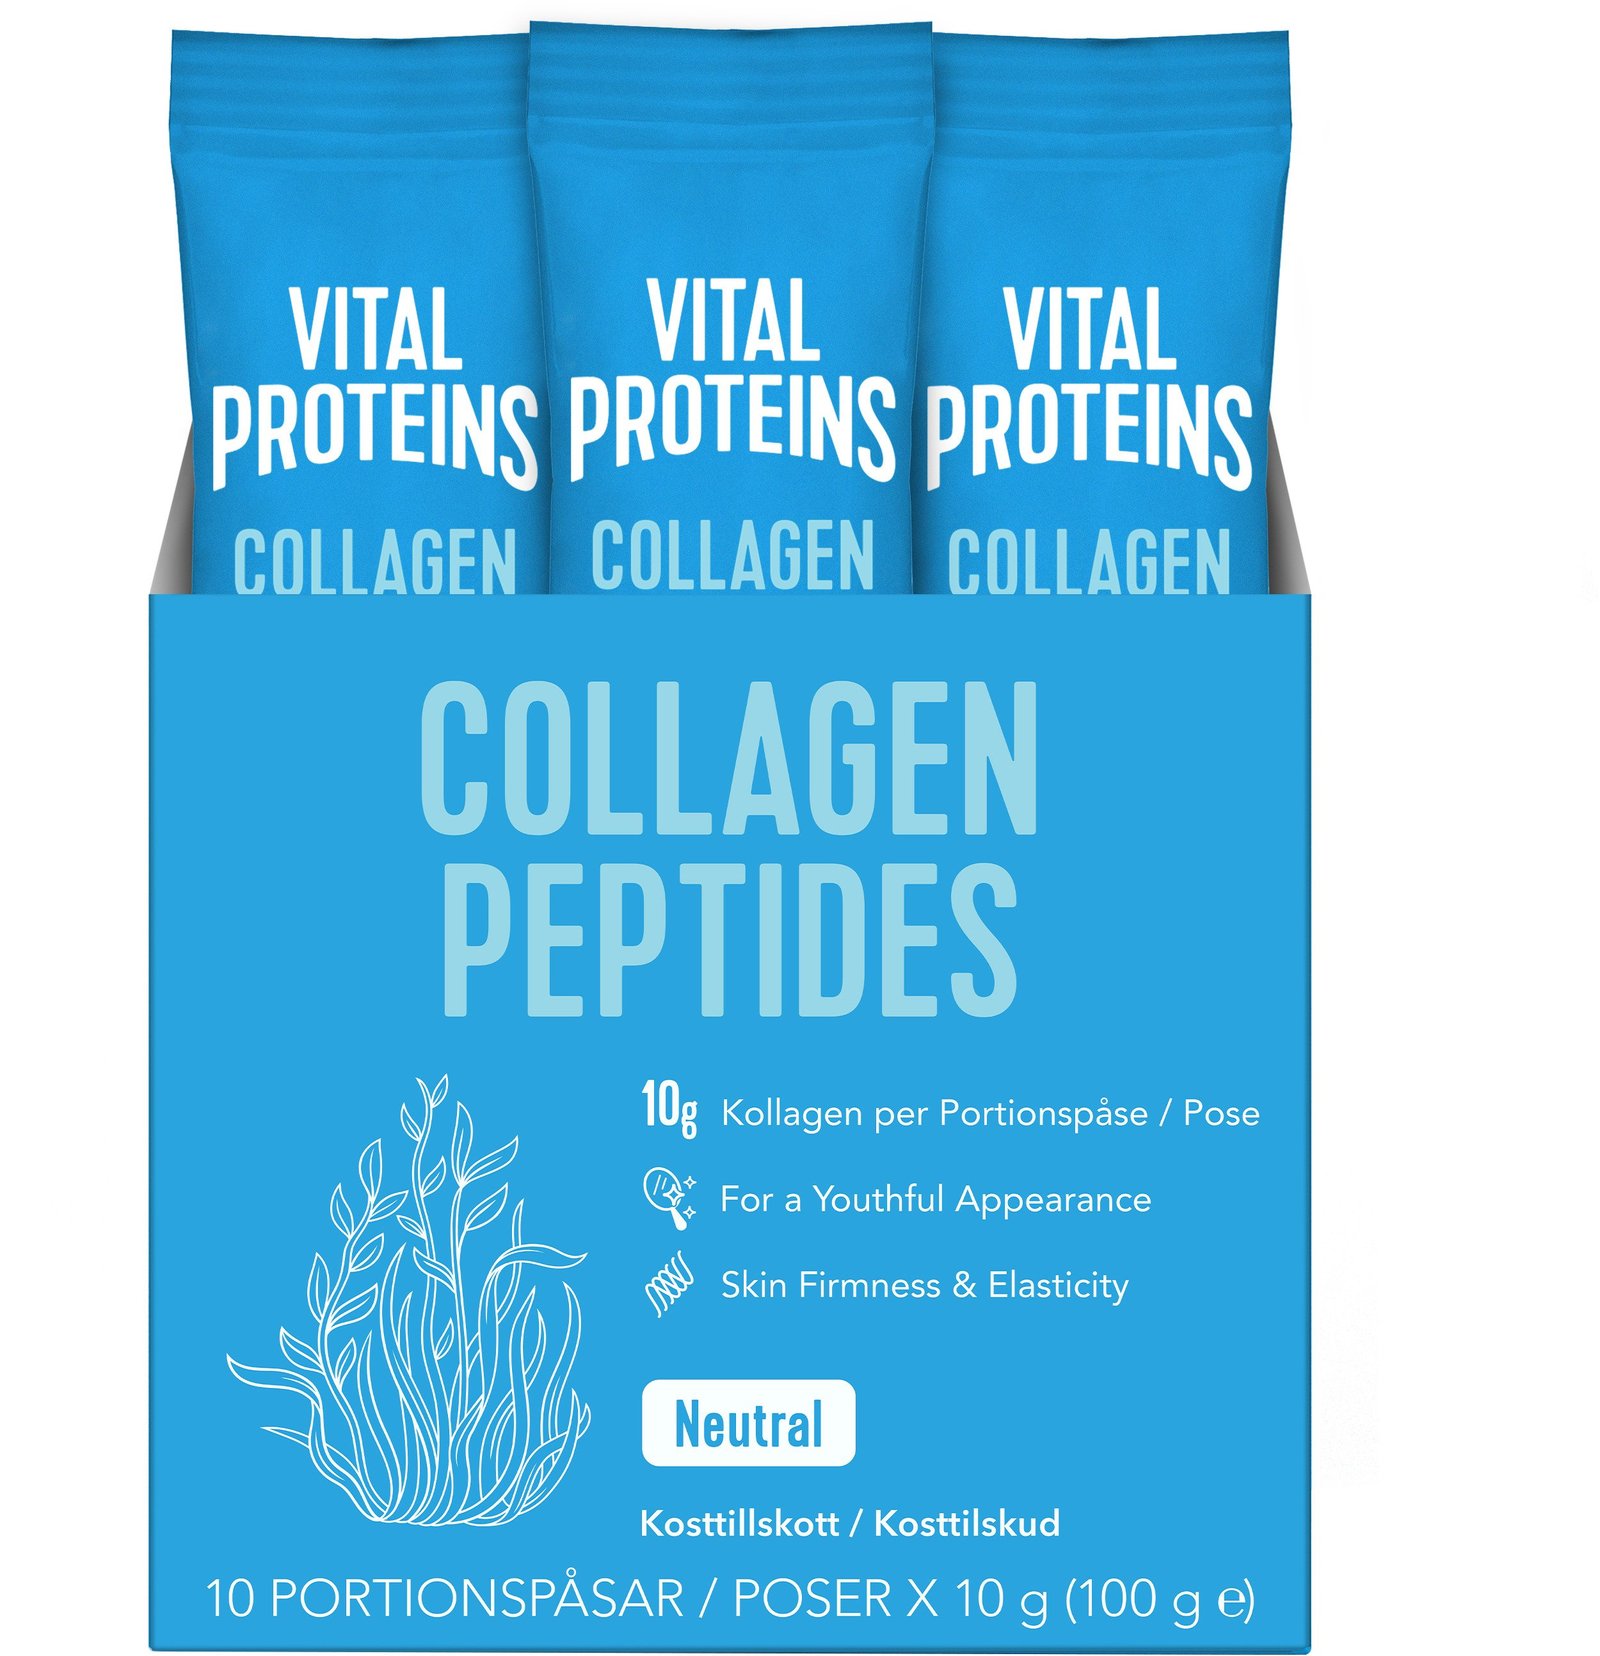 Vital Proteins Collagen Peptides Stick Pack 10g x 10 st